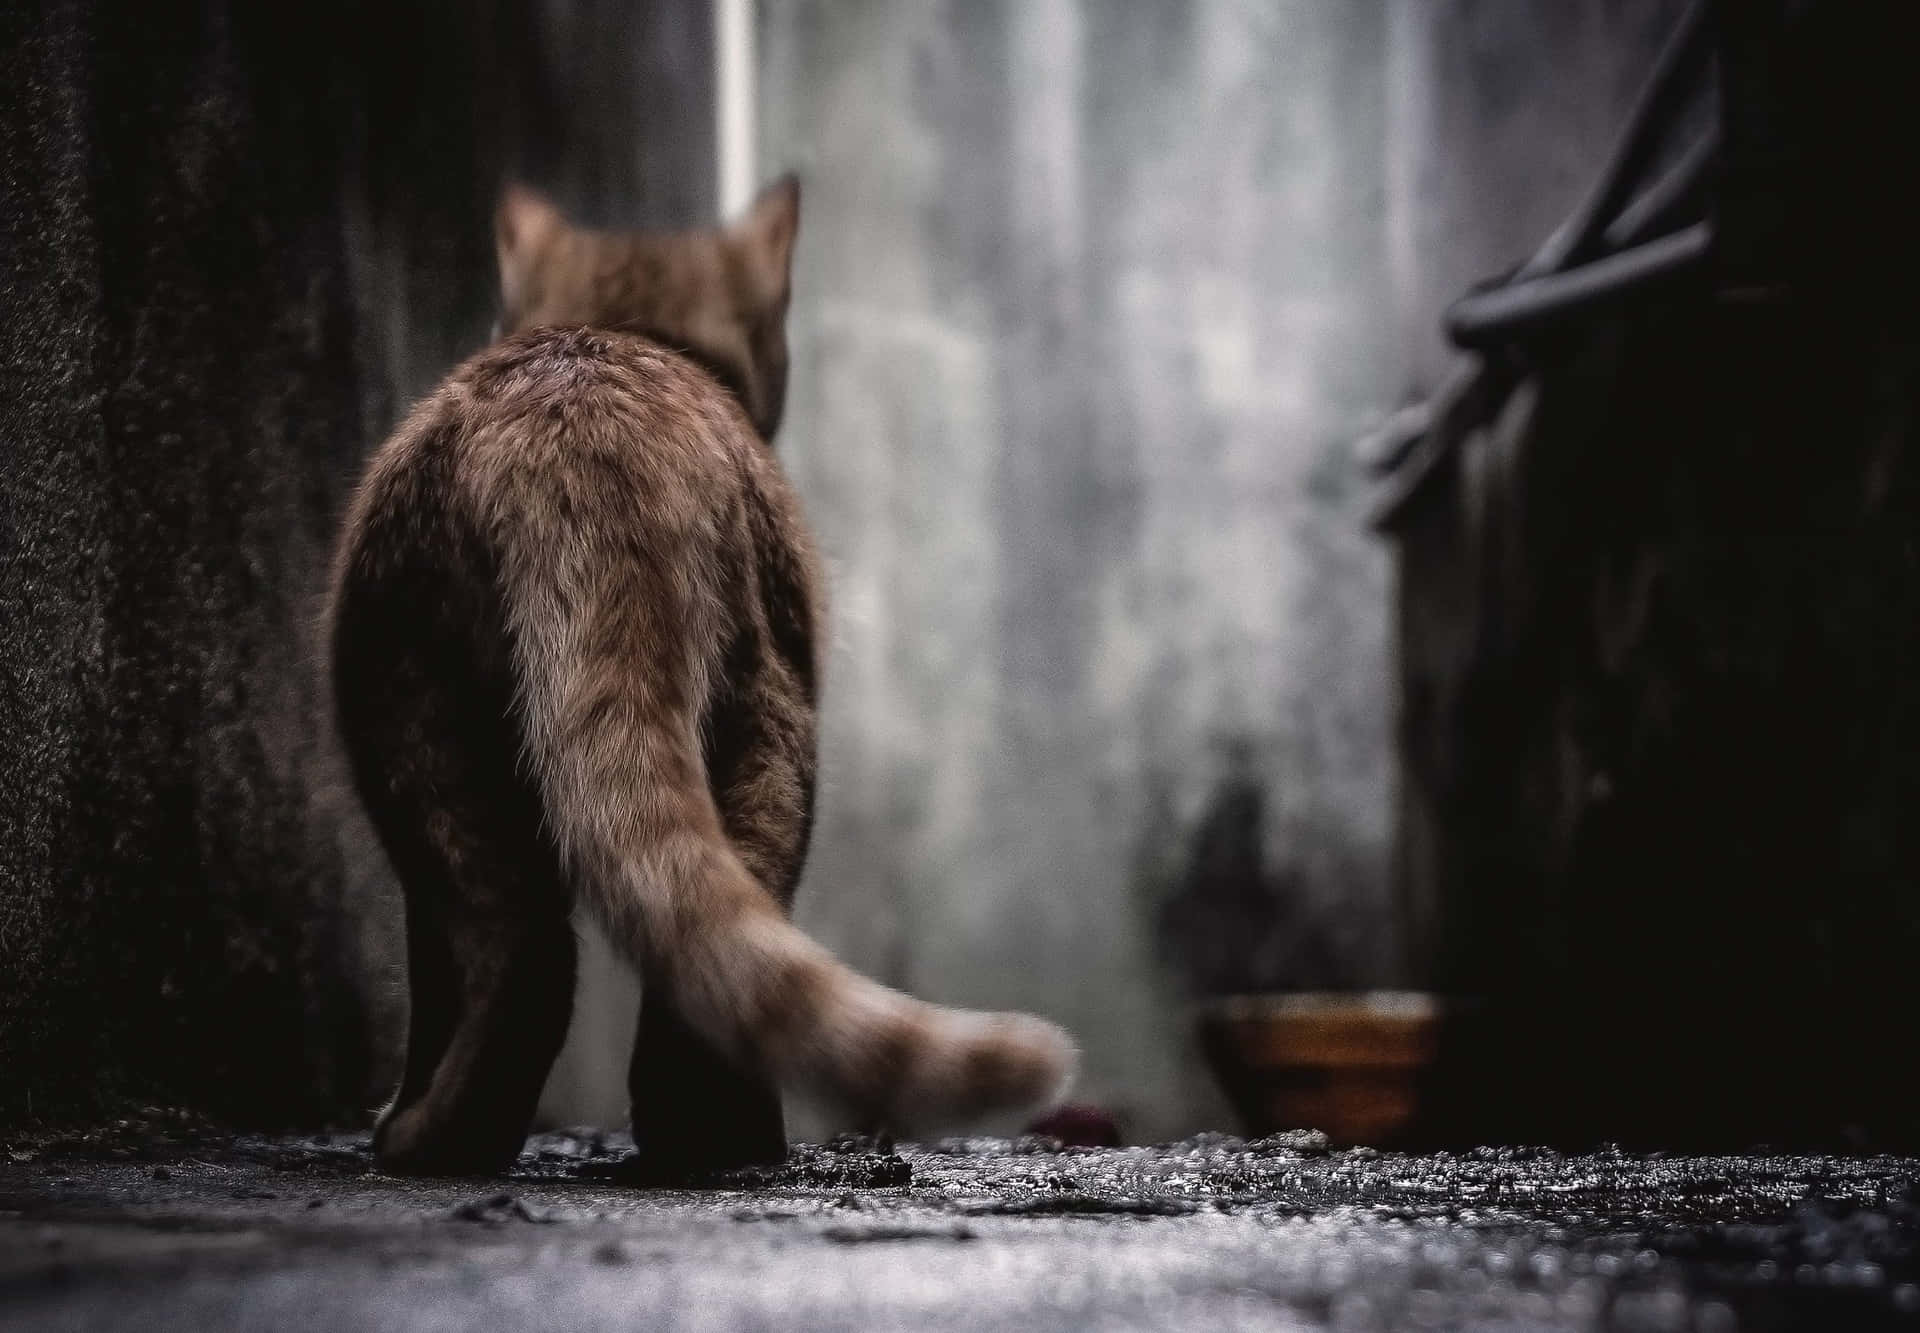 A Cat Walking Down A Dark Alley